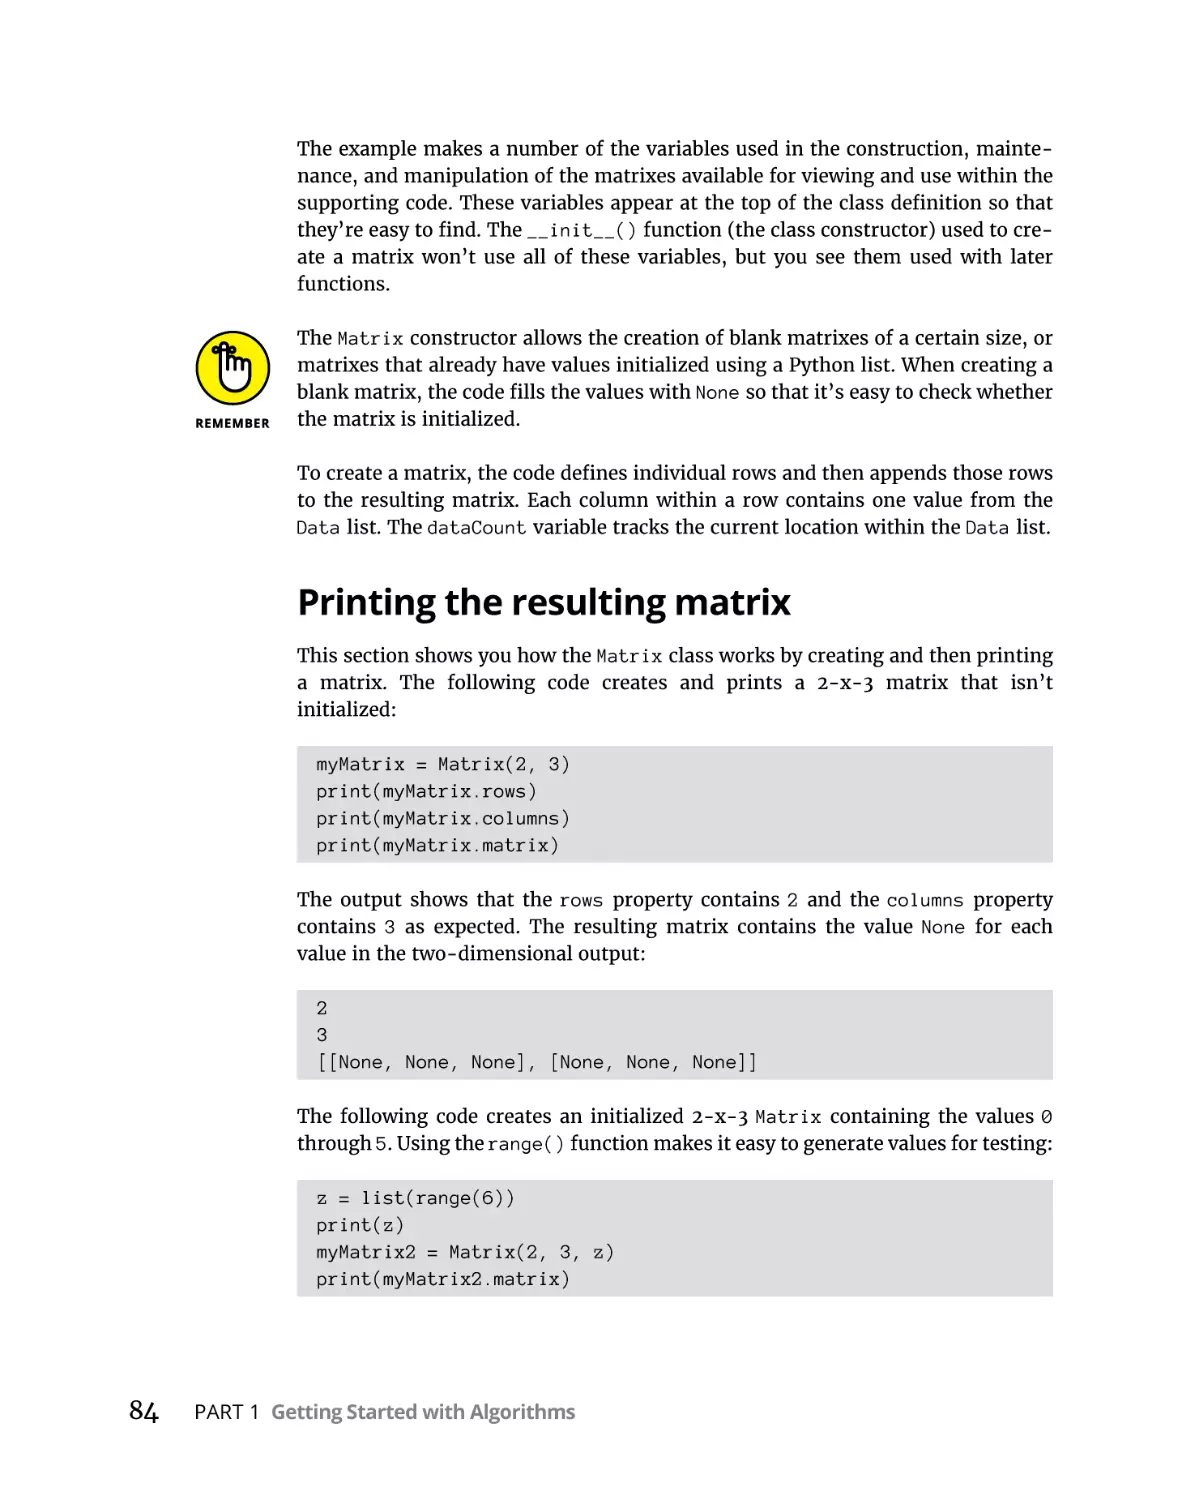 Printing the resulting matrix